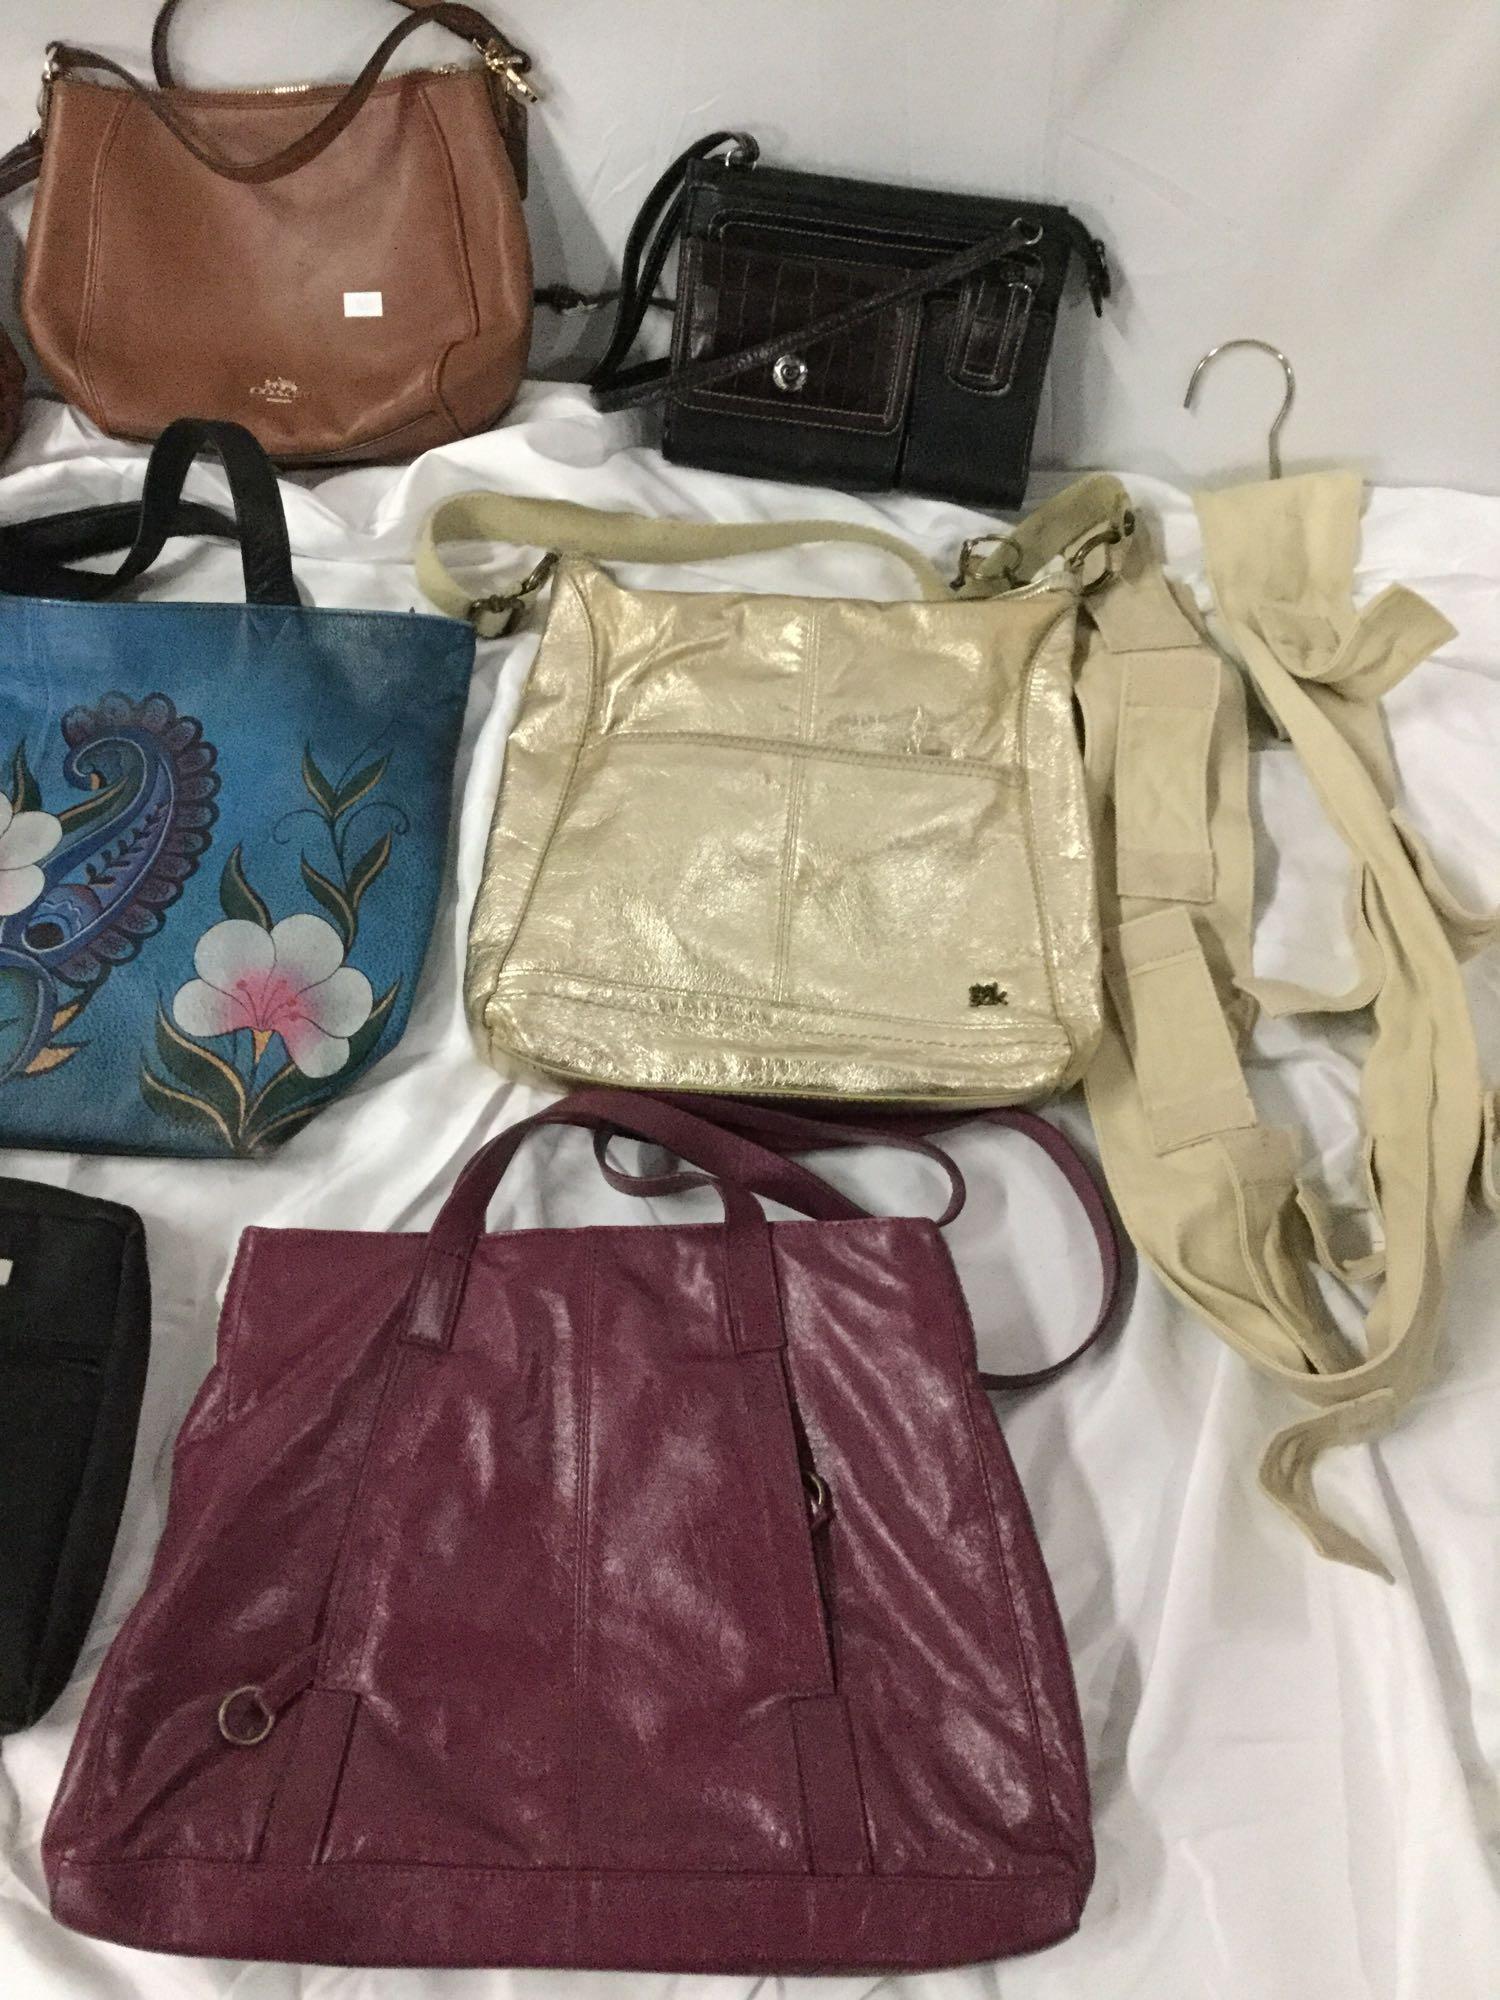 9x ladies purses handbags shoulderbag plus bag hanger Coach Baggallini Anuschka Sak